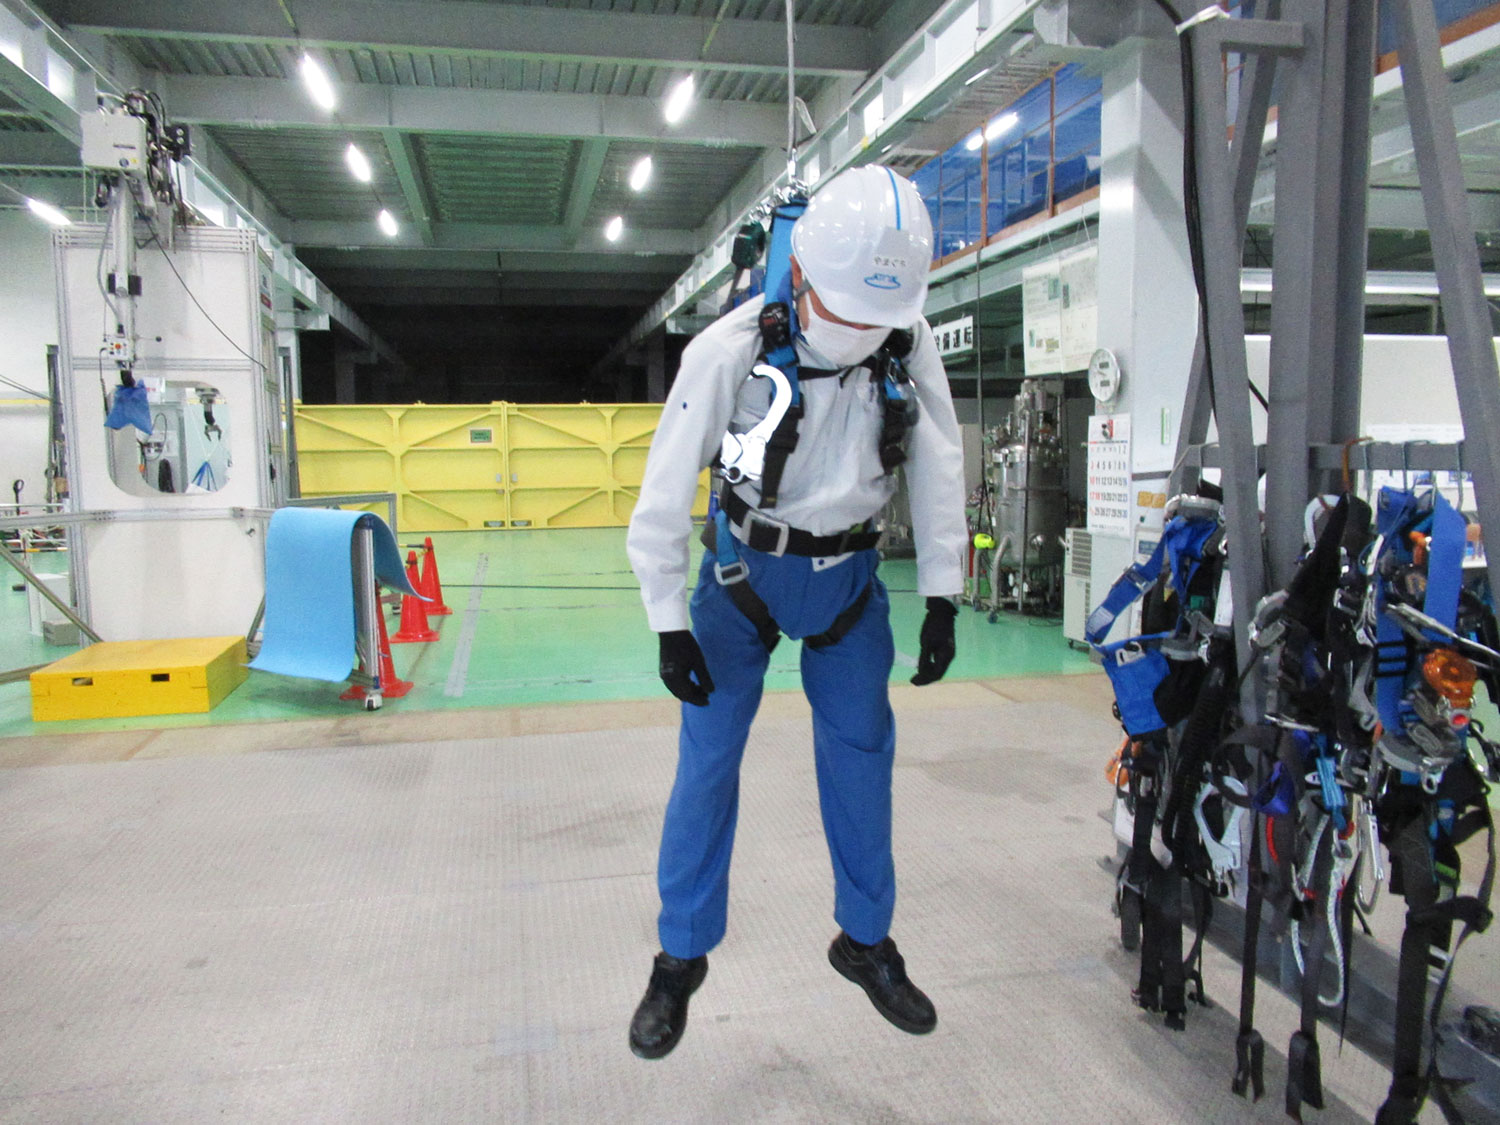 Full harness (fall accident prevention equipment)